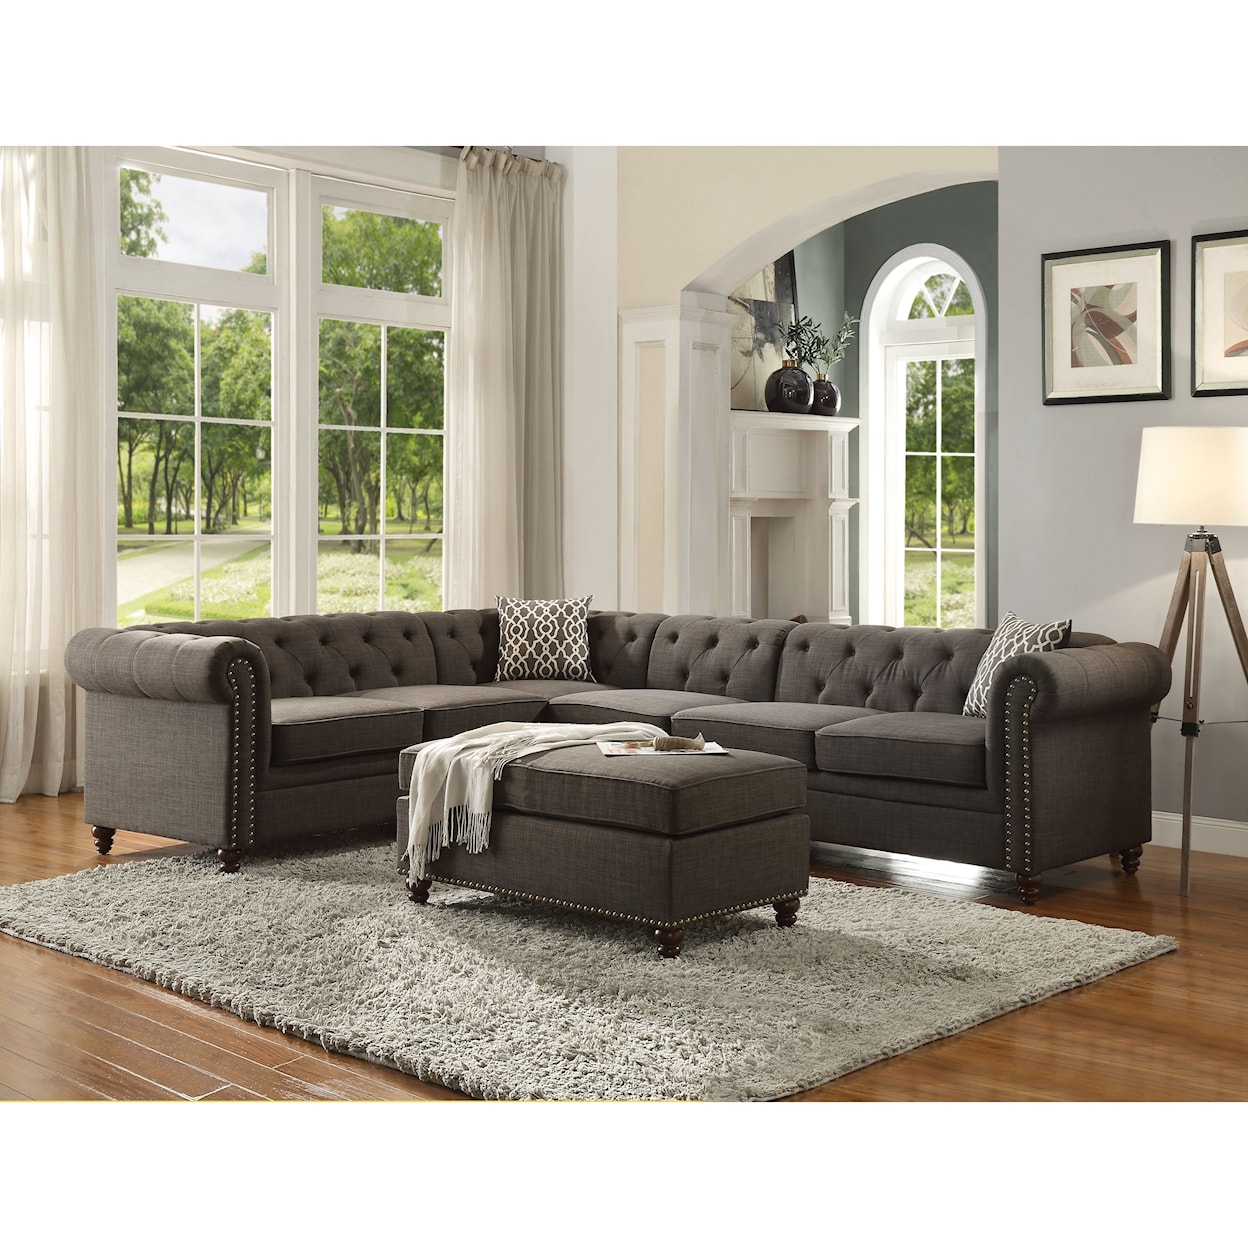 Acme Furniture Aurelia II Stationary Living Room Group